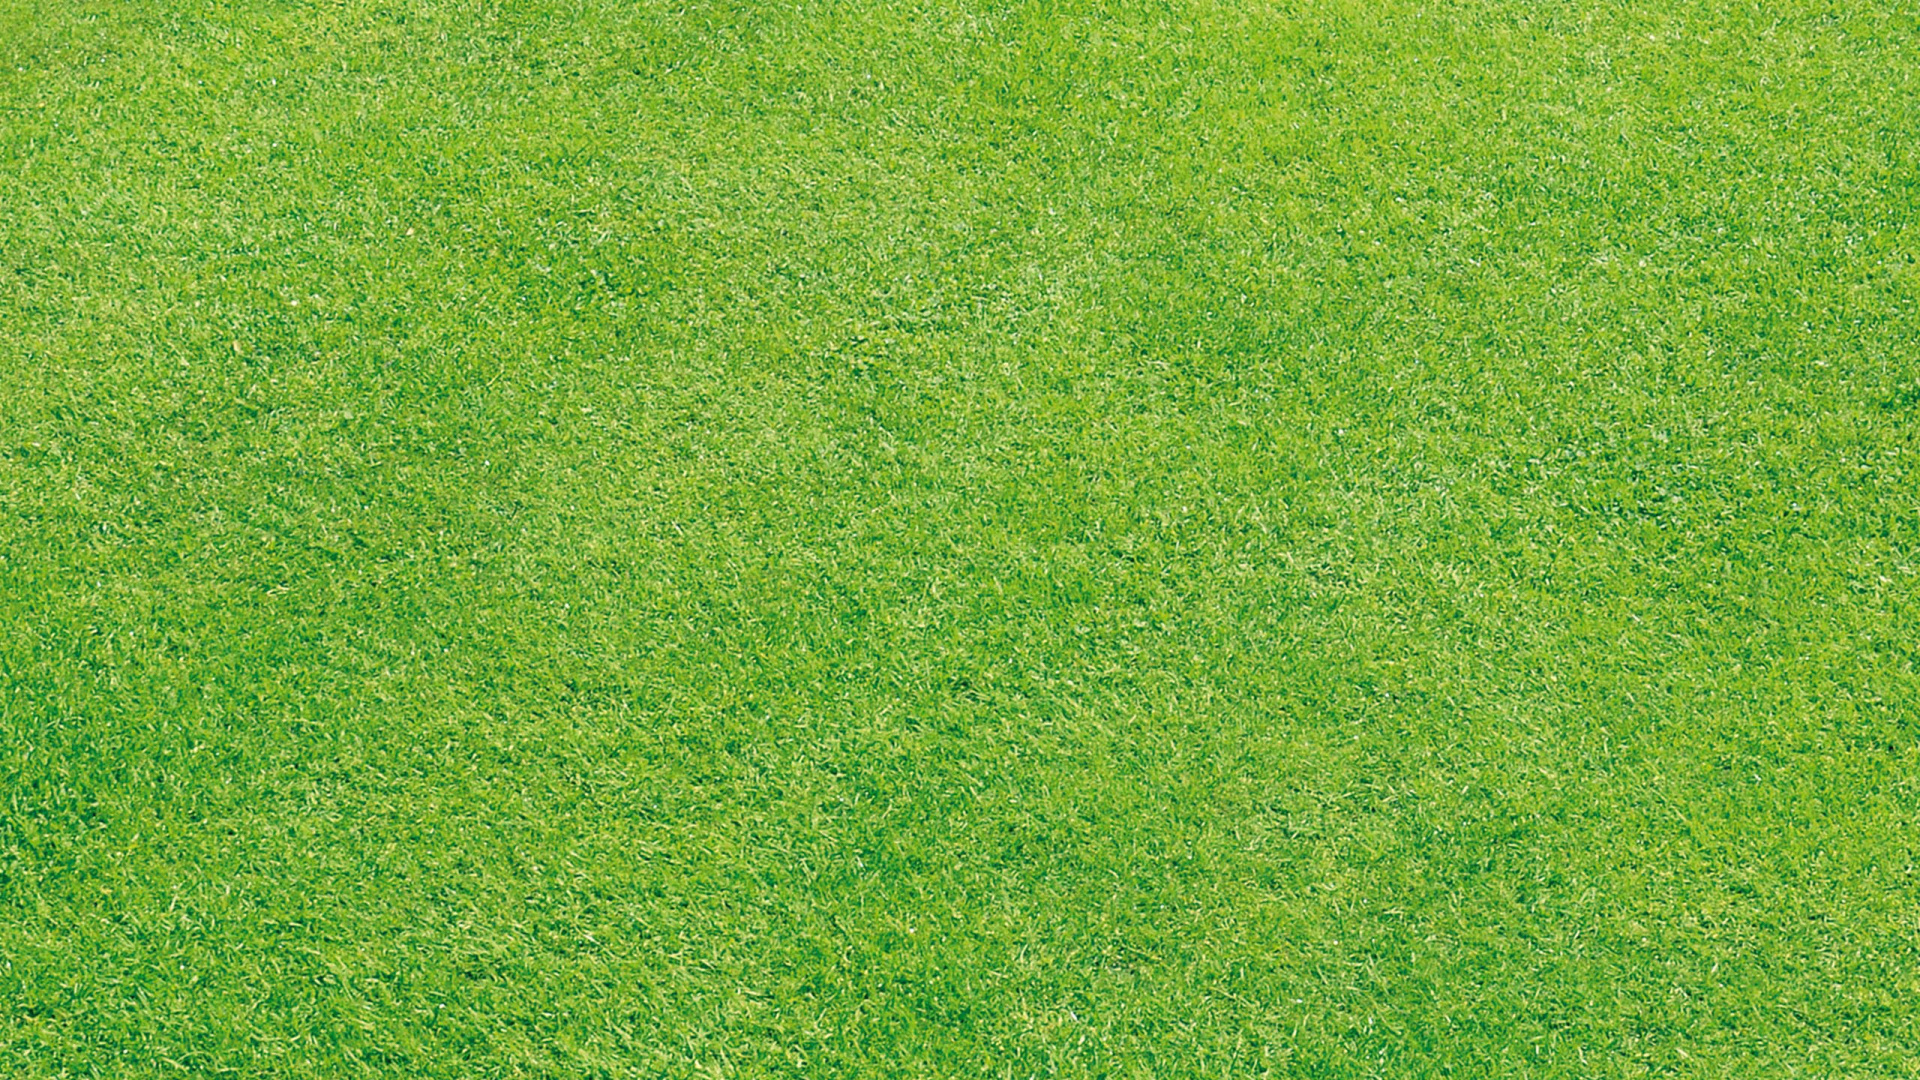 Green Grass Field During Daytime. Wallpaper in 1920x1080 Resolution